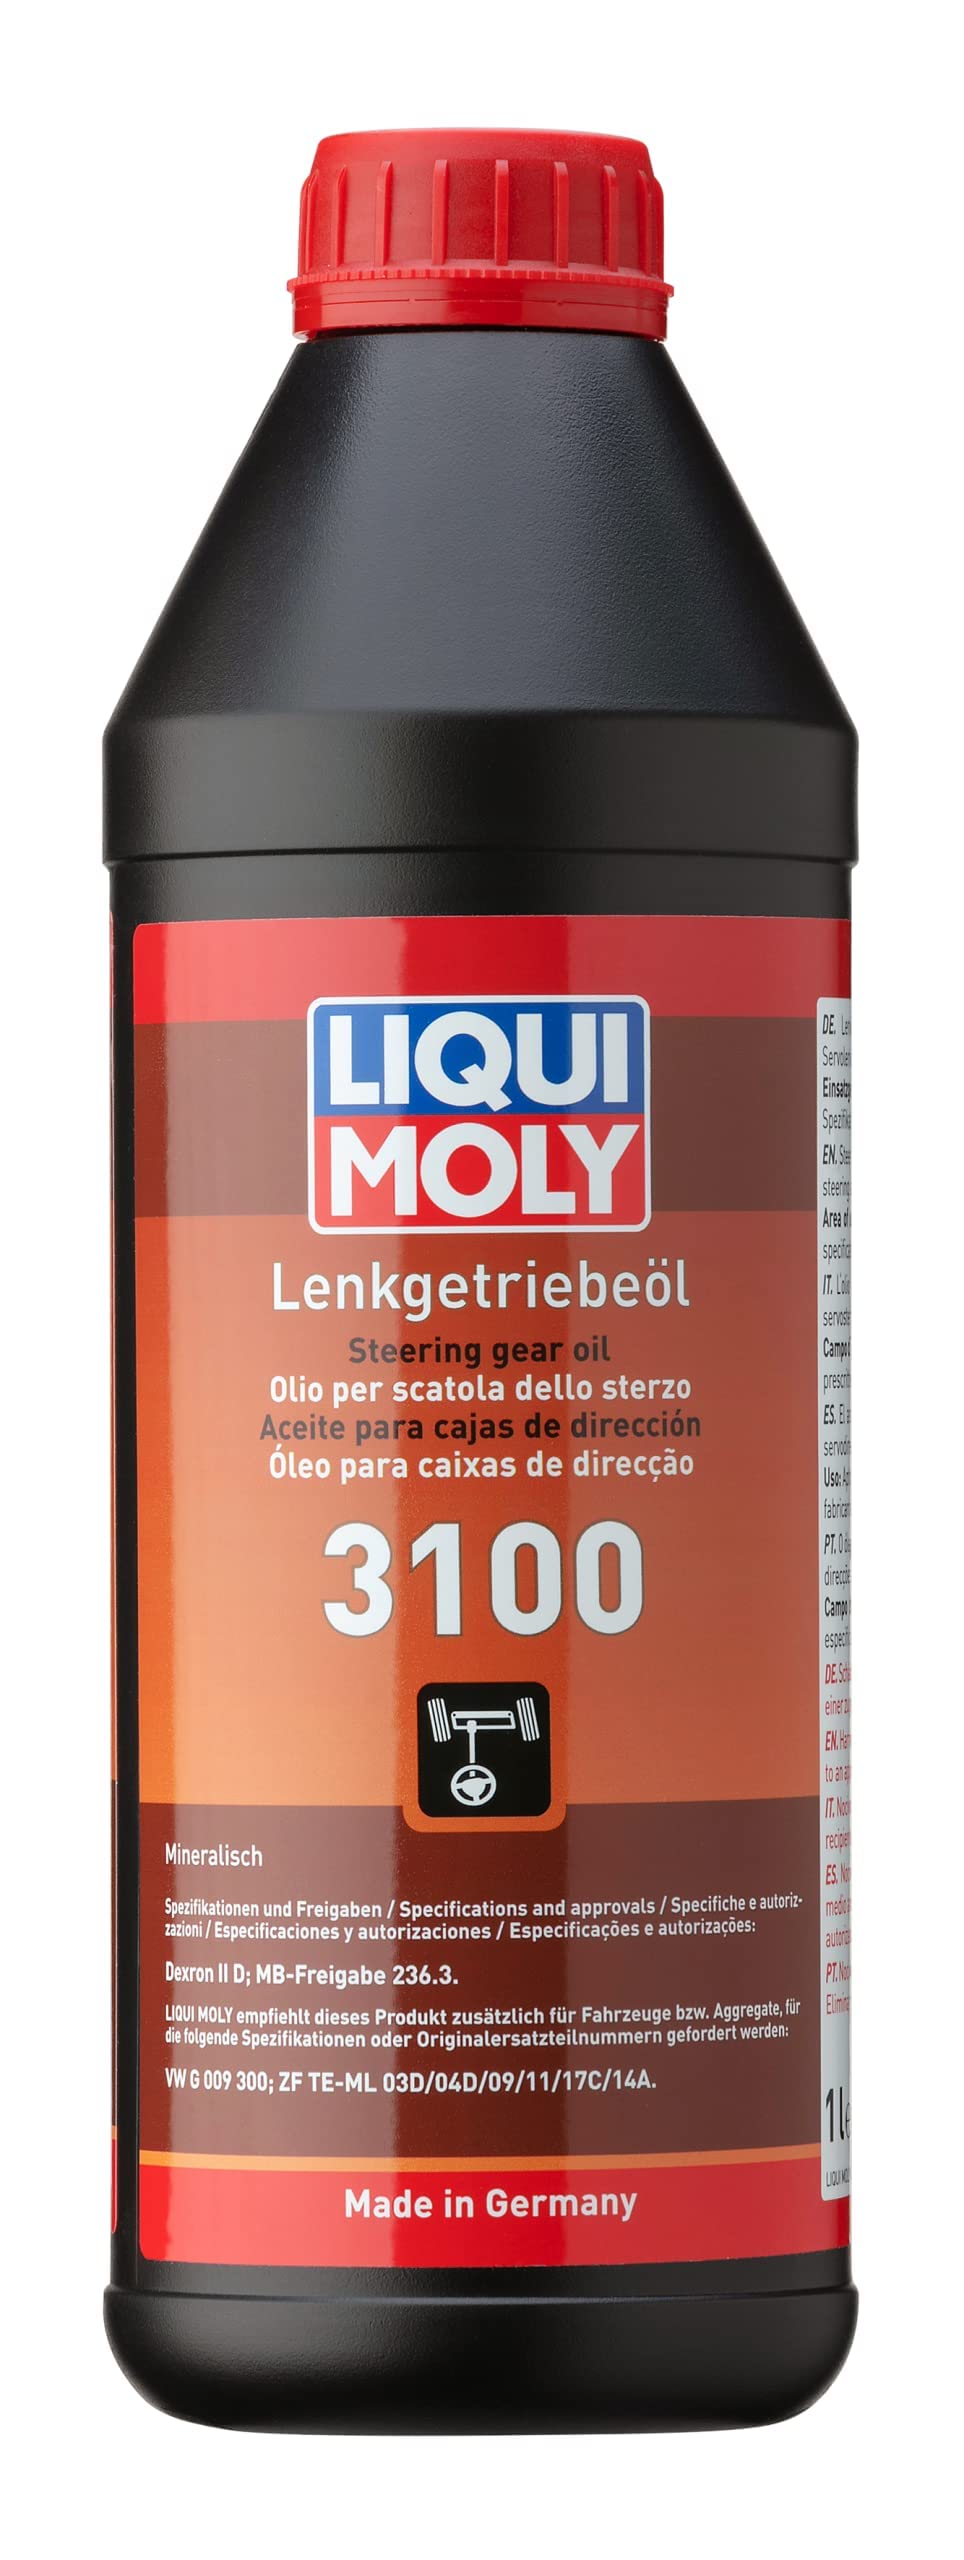 LIQUI MOLY Lenkgetriebeöl 3100 | 1 L | Hydrauliköl | Art.-Nr.: 1145 von Liqui Moly